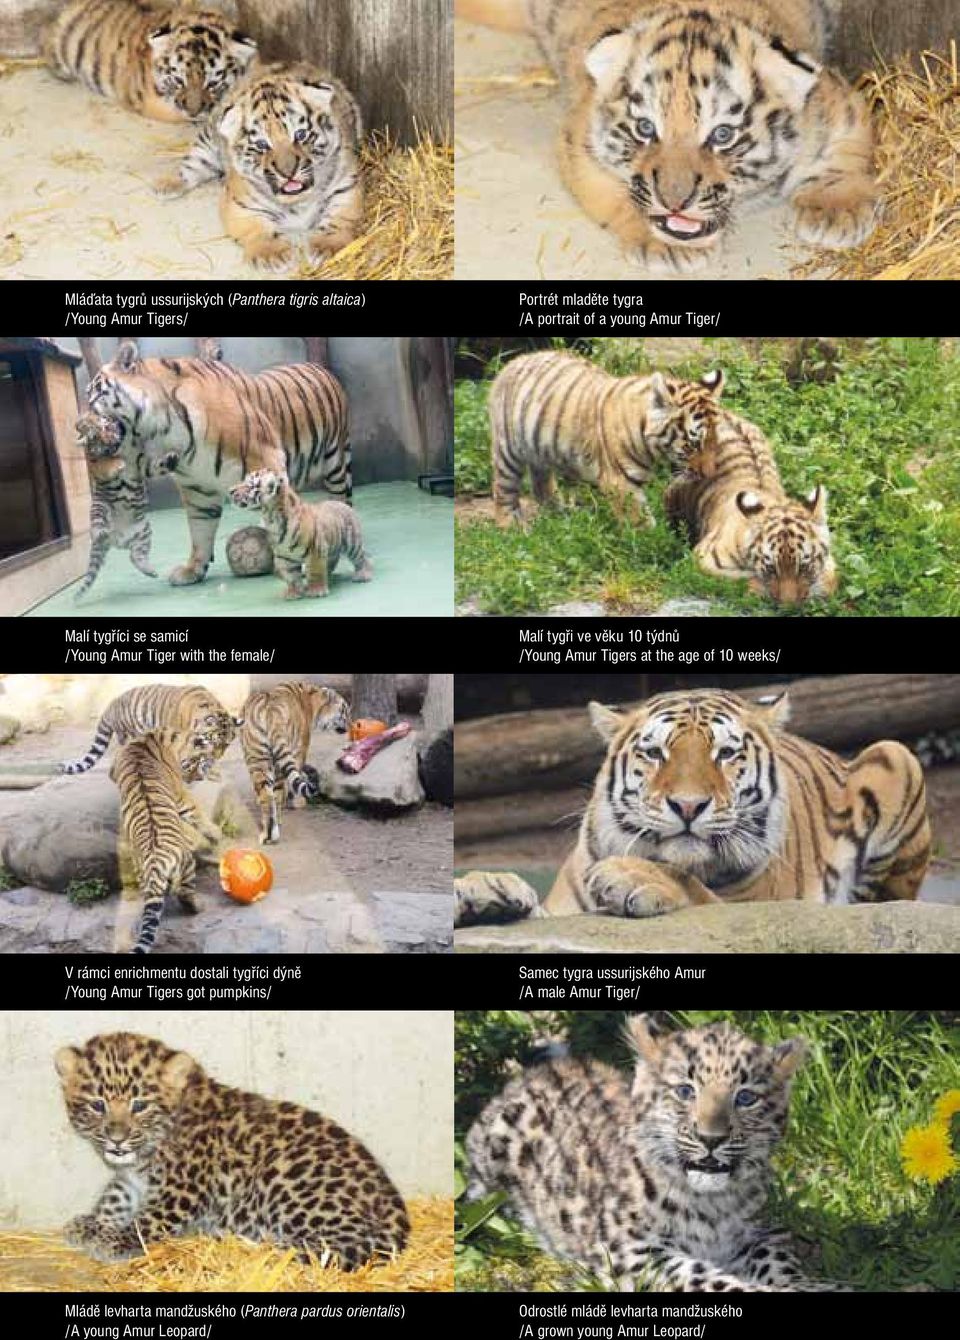 rámci enrichmentu dostali tygříci dýně /Young Amur Tigers got pumpkins/ Samec tygra ussurijského Amur /A male Amur Tiger/ Mládě